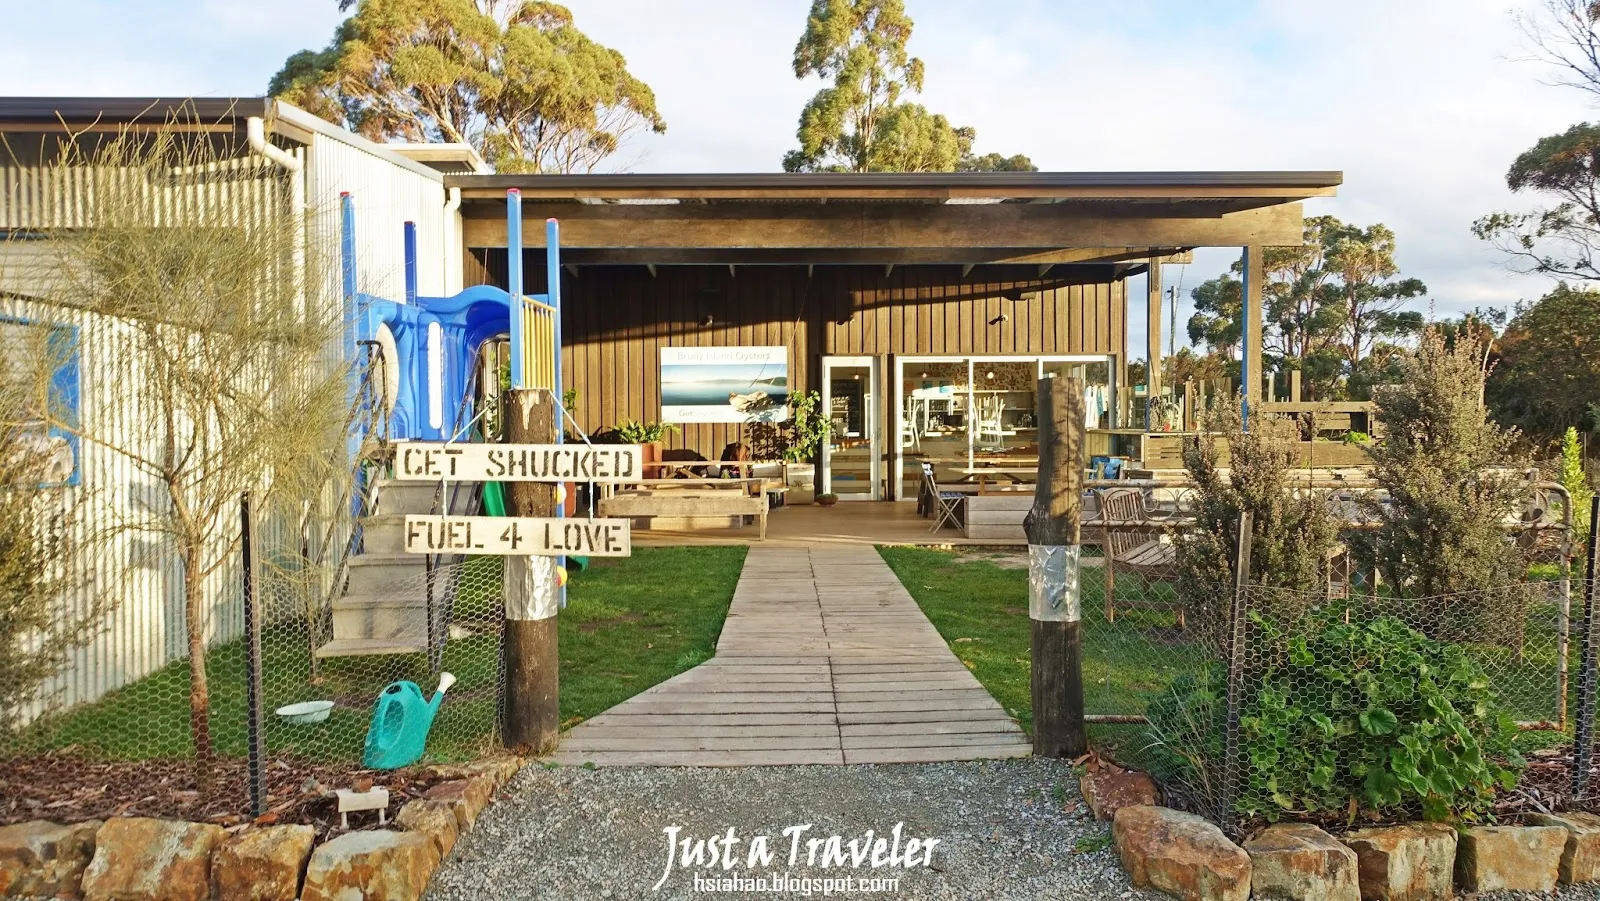 塔斯馬尼亞-美食-推薦-布魯尼島-Bruny-Island-生蠔農場-Oyster-Farm-澳洲-Tasmania-Tourist-Attraction-Australia